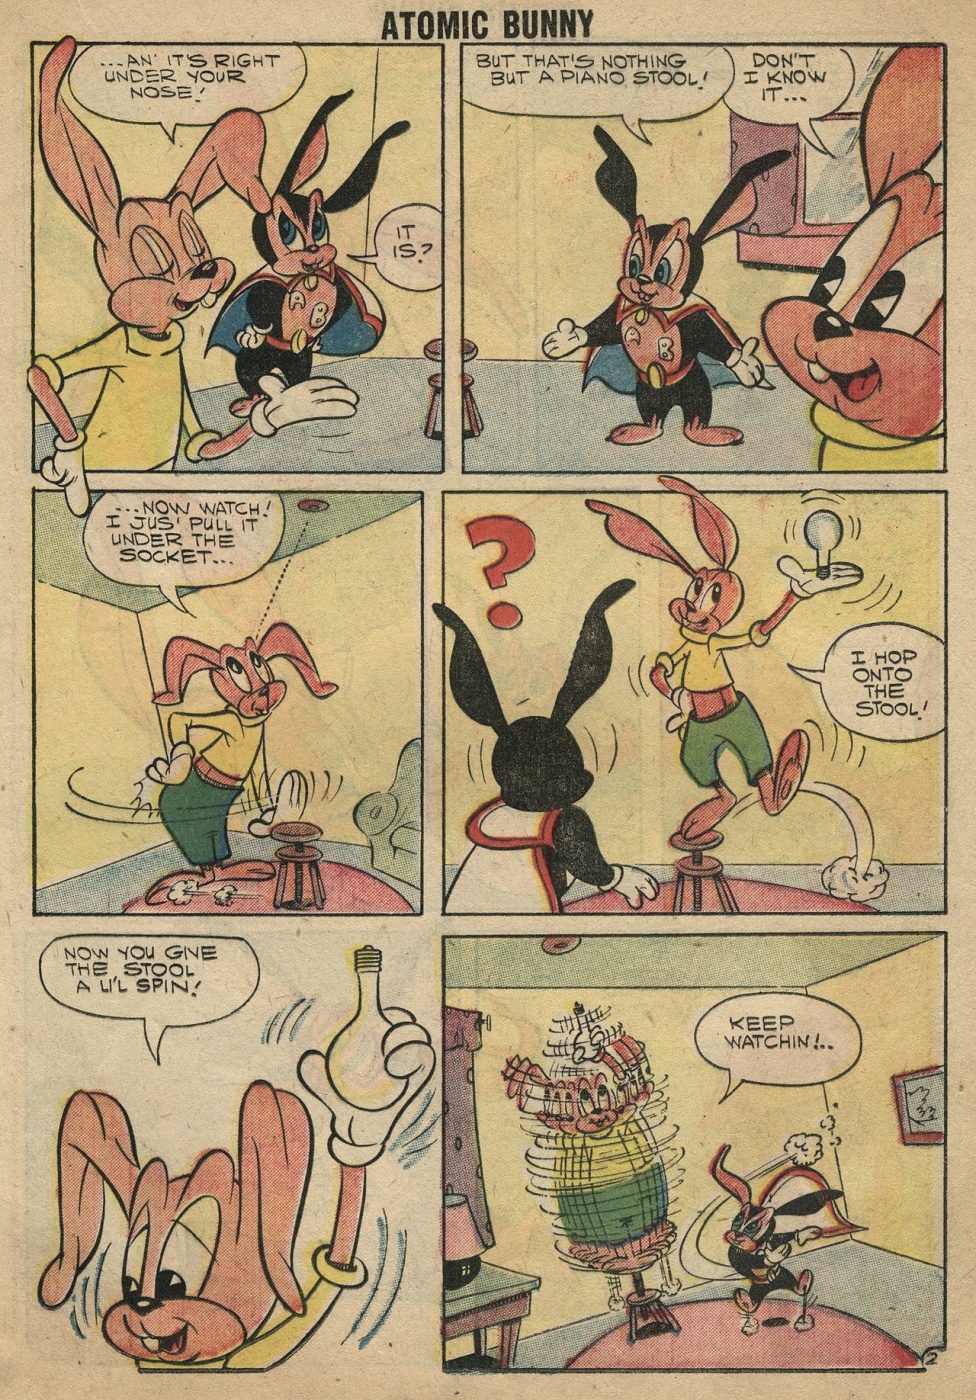 Atomic-Bunny-Comic-Strips (13)